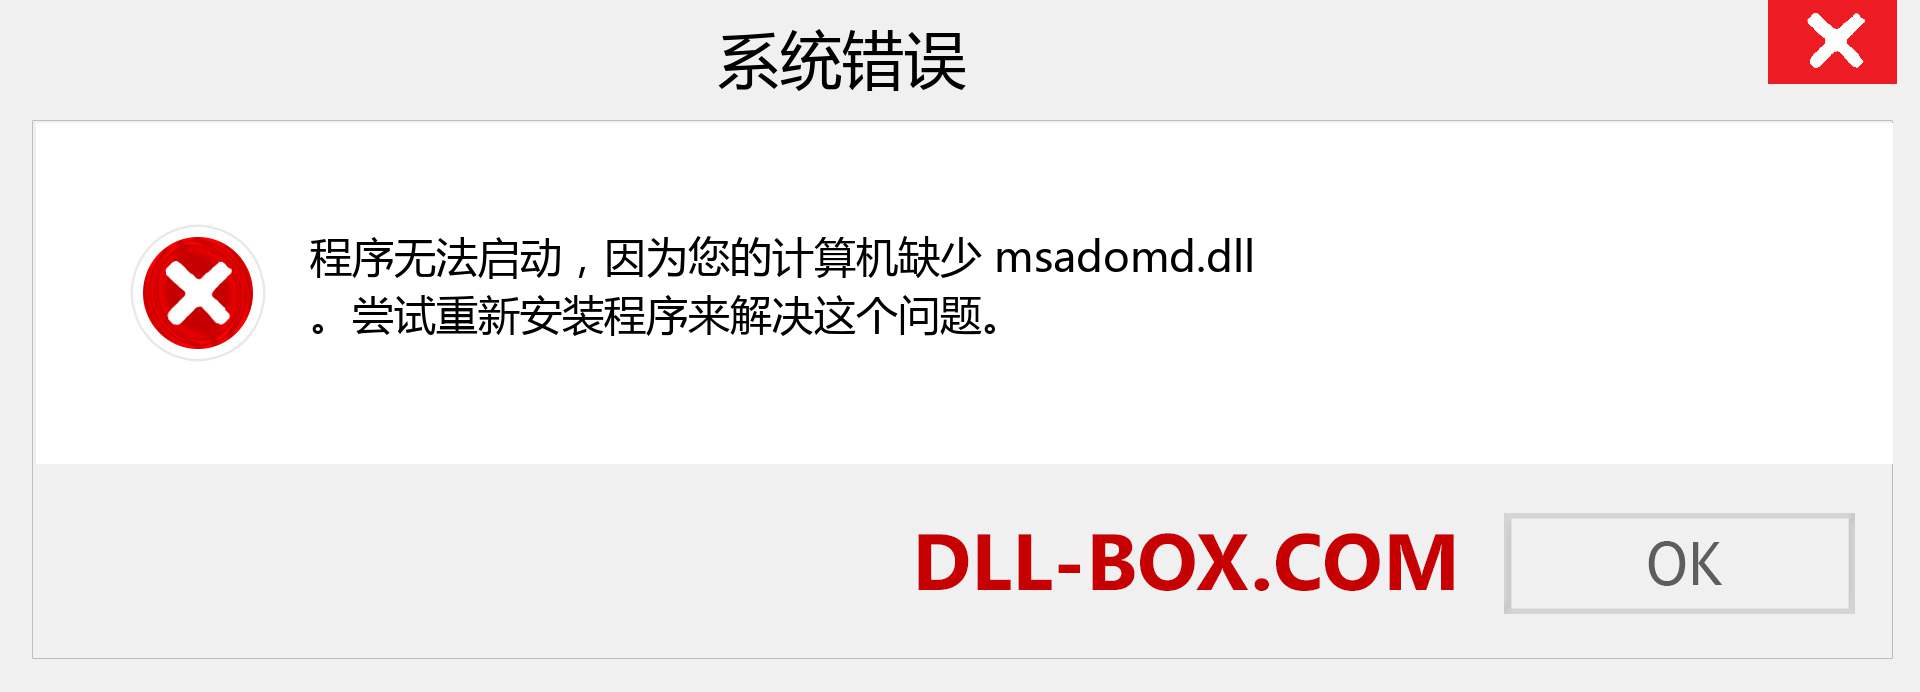 msadomd.dll 文件丢失？。 适用于 Windows 7、8、10 的下载 - 修复 Windows、照片、图像上的 msadomd dll 丢失错误